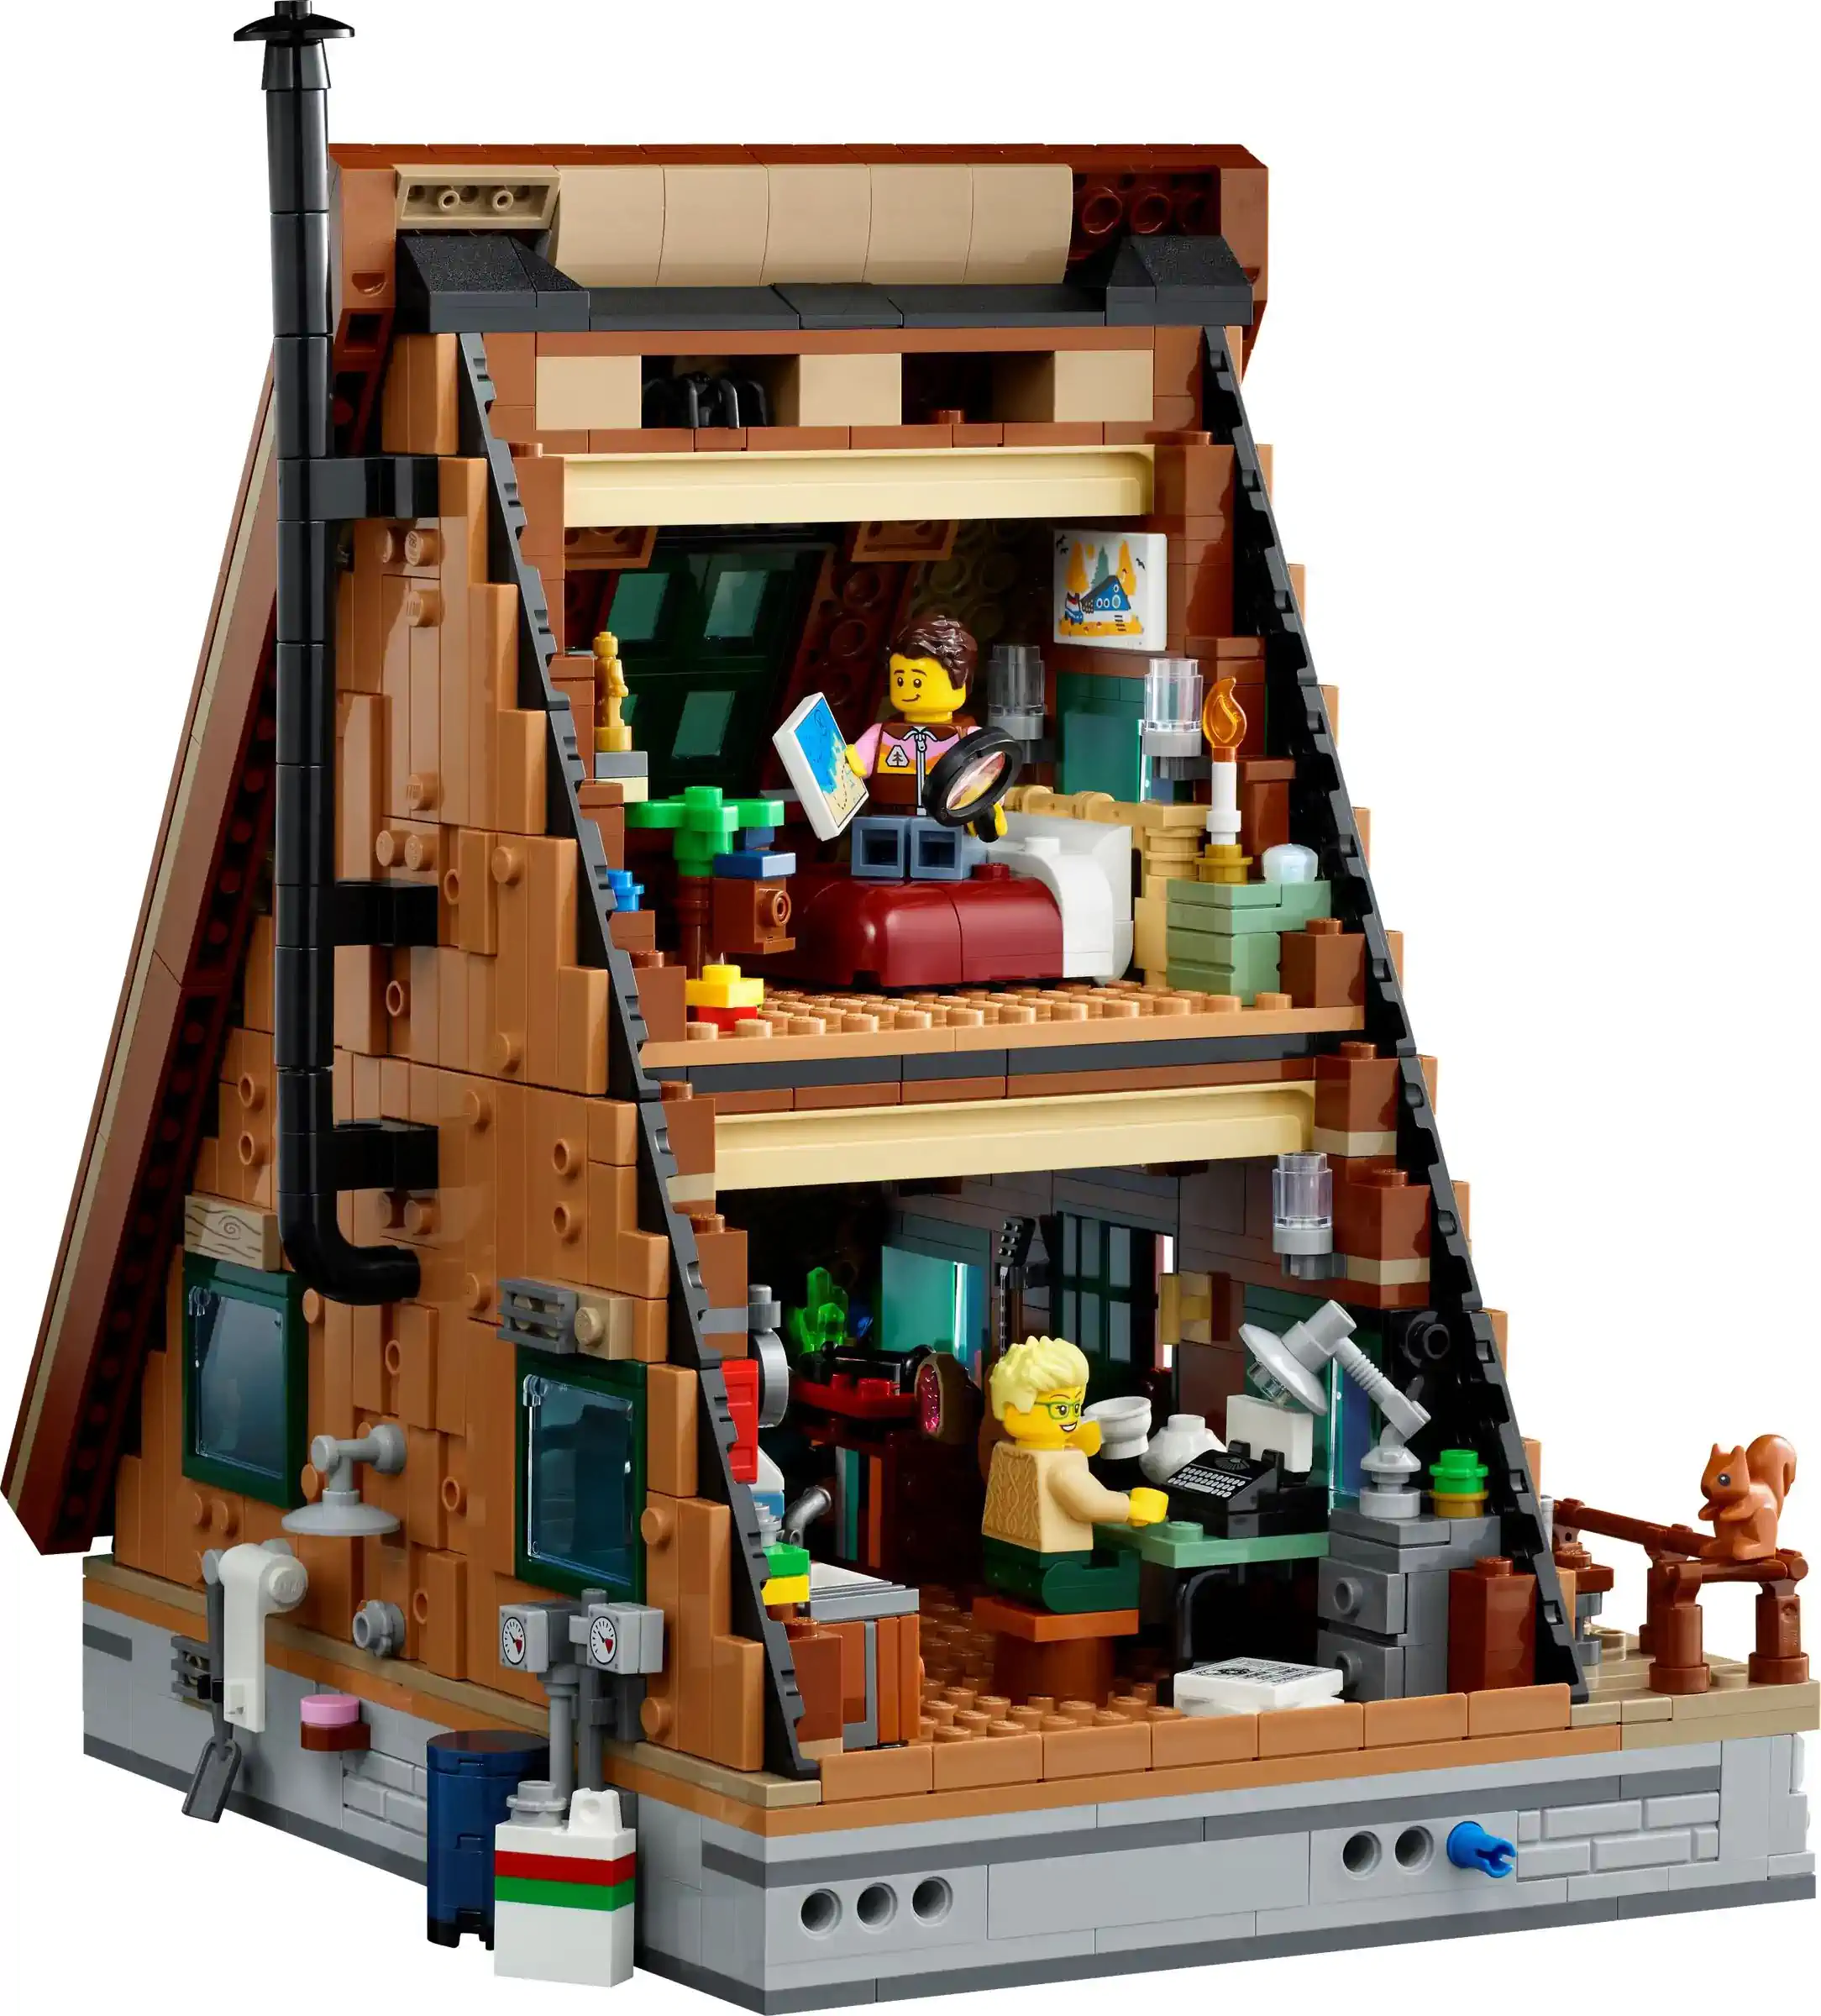 LEGO IDEAS Set "Finnhütte" (21338)